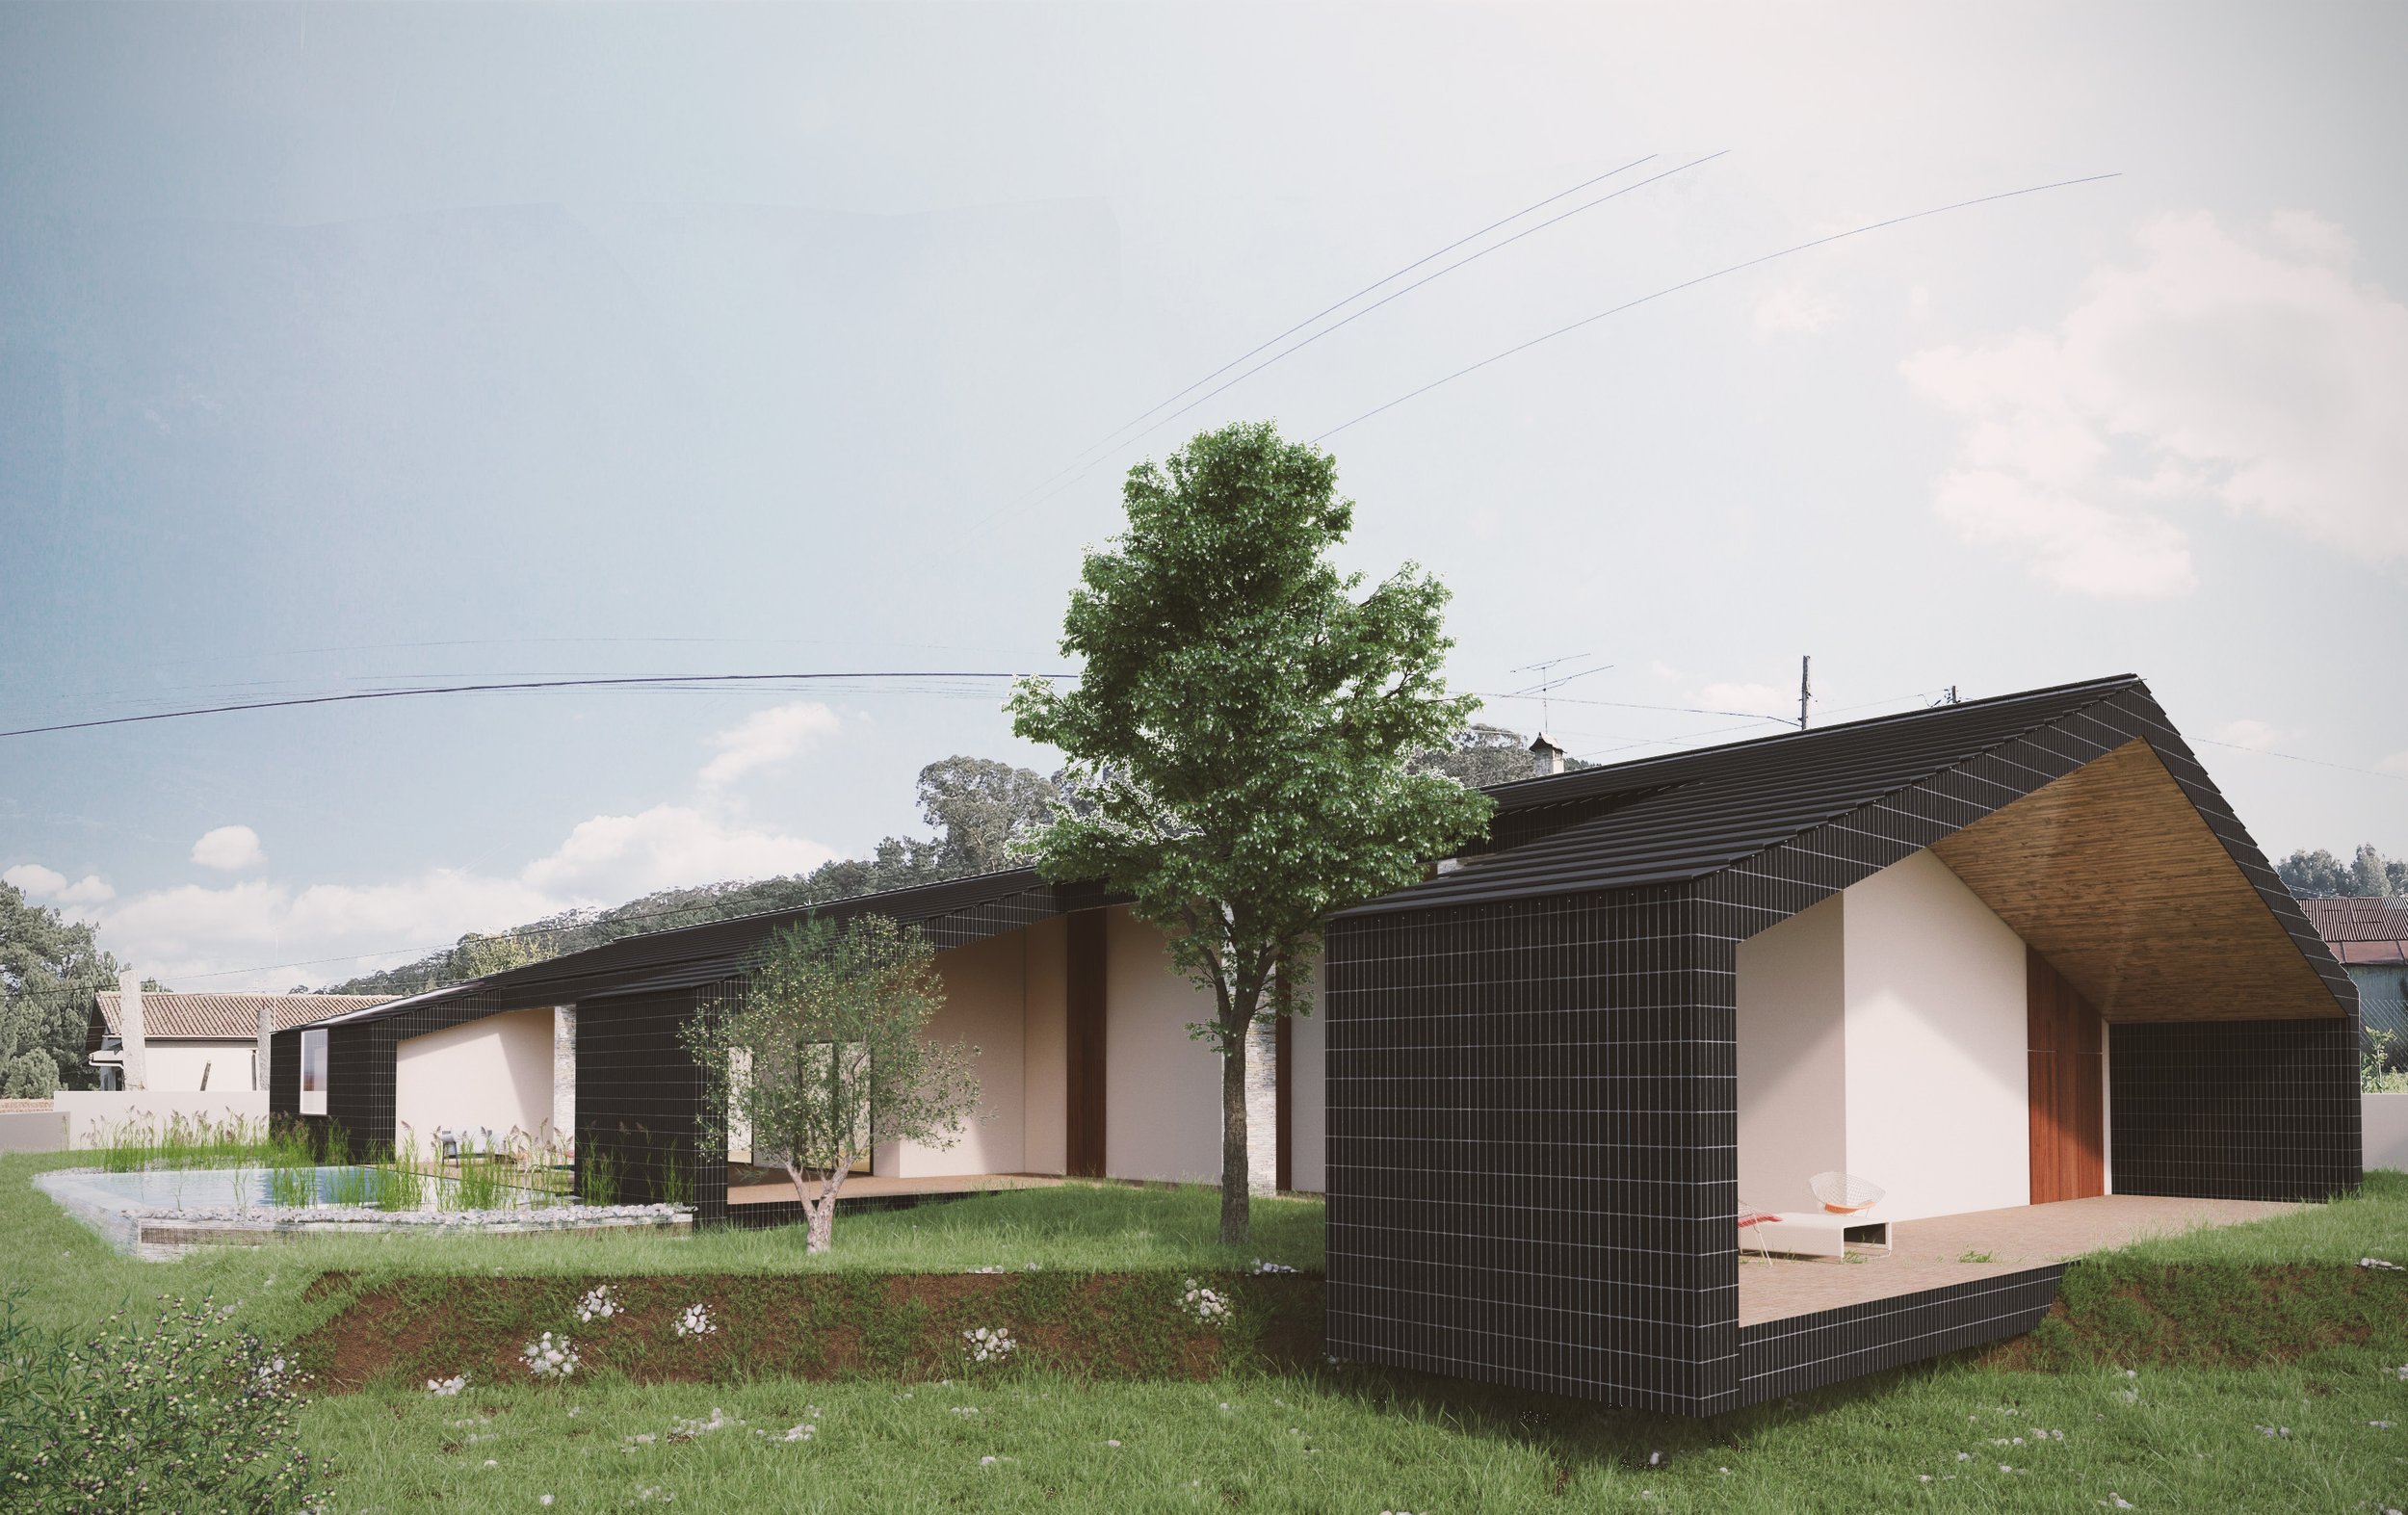 Moradia Sakura - eva atelier - arquitectura - projecto - oliveira de azeméis - arquitectos - porto (1).jpg